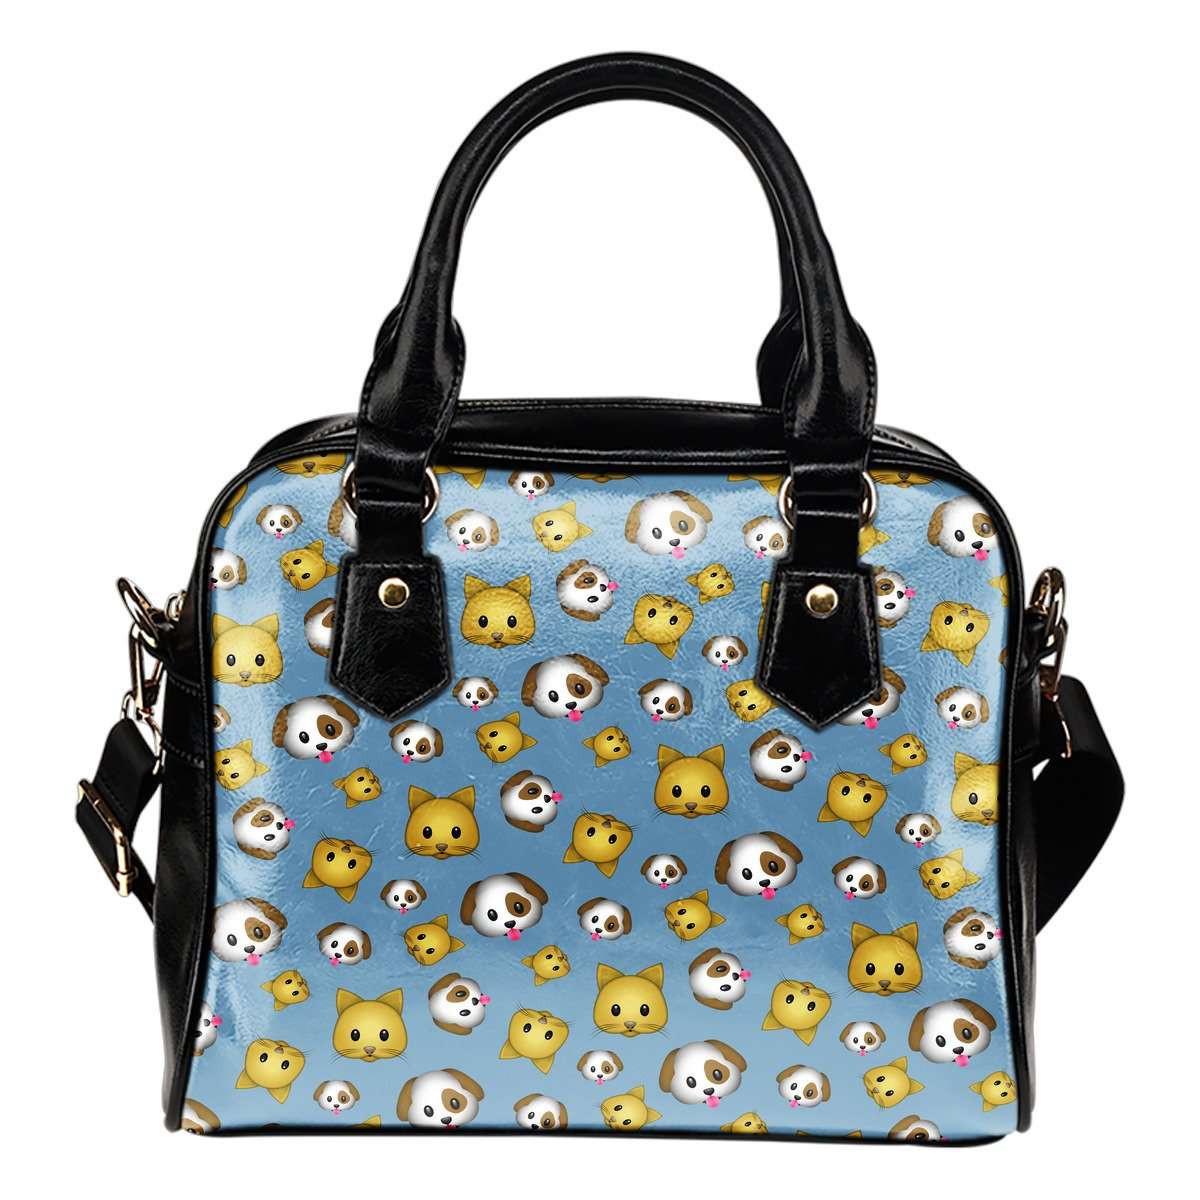 Fun Emojis Cats And Dogs Theme Women Fashion Shoulder Handbag Black Vegan Faux Leather - STUDIO 11 COUTURE